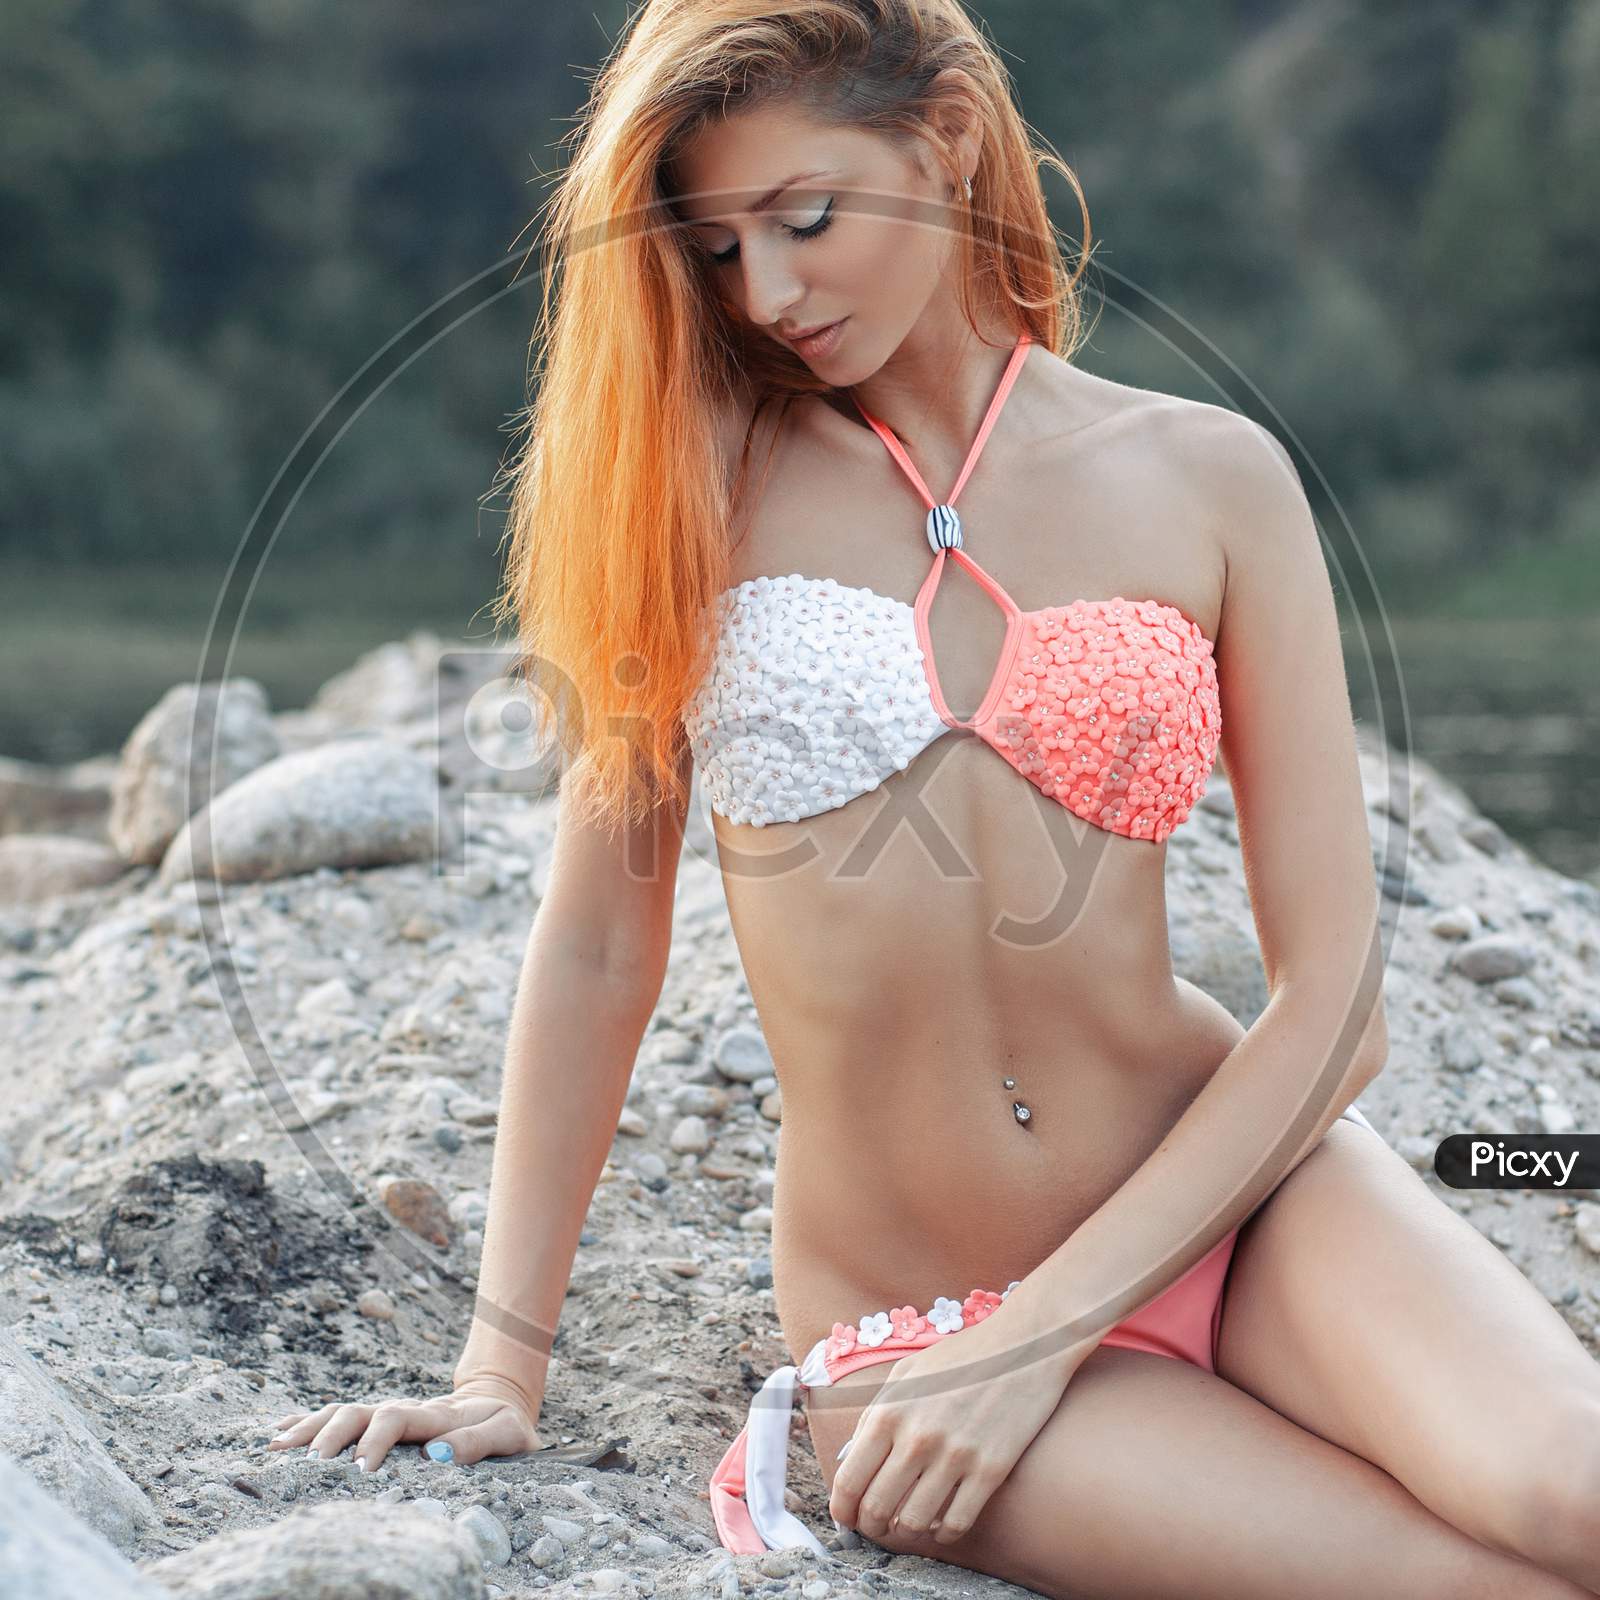 Sexy Girl With Red Hair In A Bikini On The Beach.